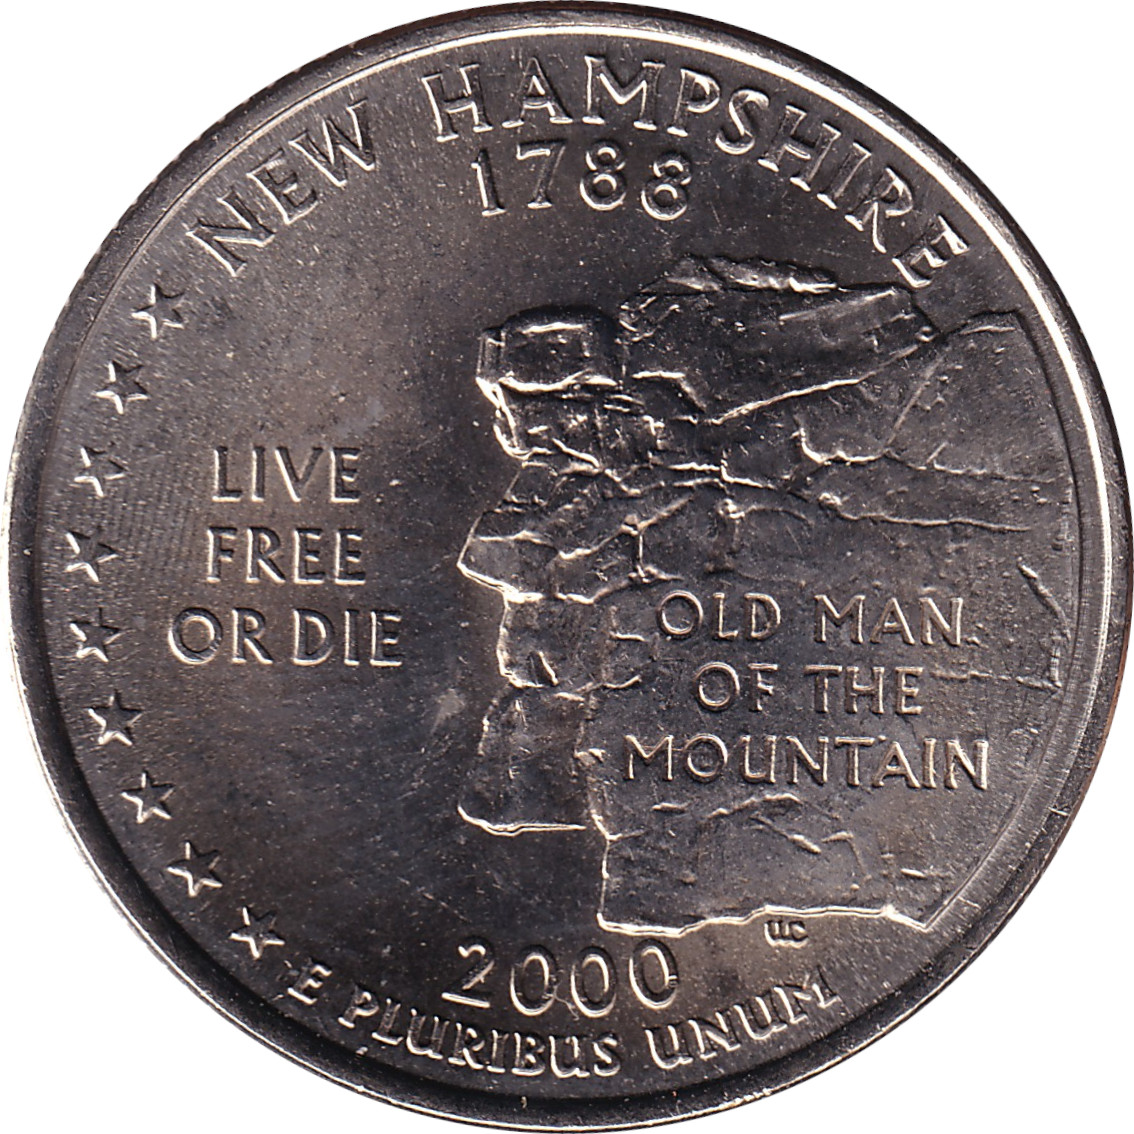 1/4 dollar - New Hampshire